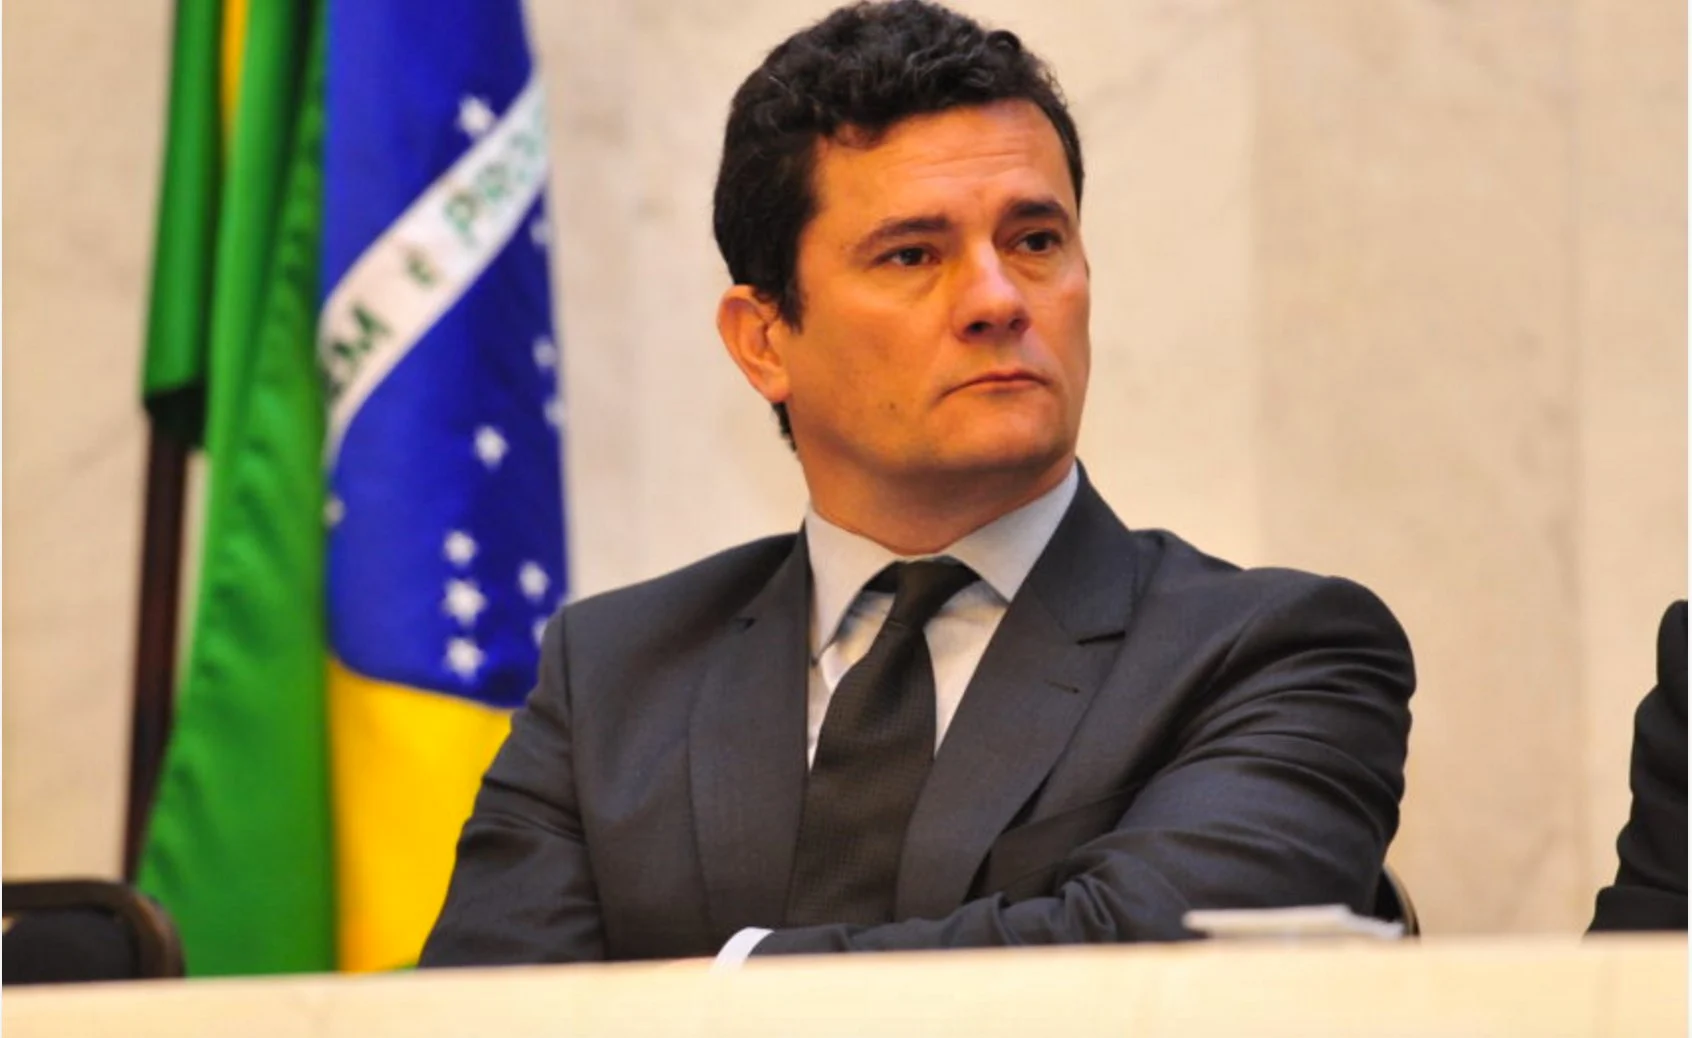 URGENTE: STF aceita denúncia contra Sergio Moro e o torna réu por calúnia contra Gilmar Mendes